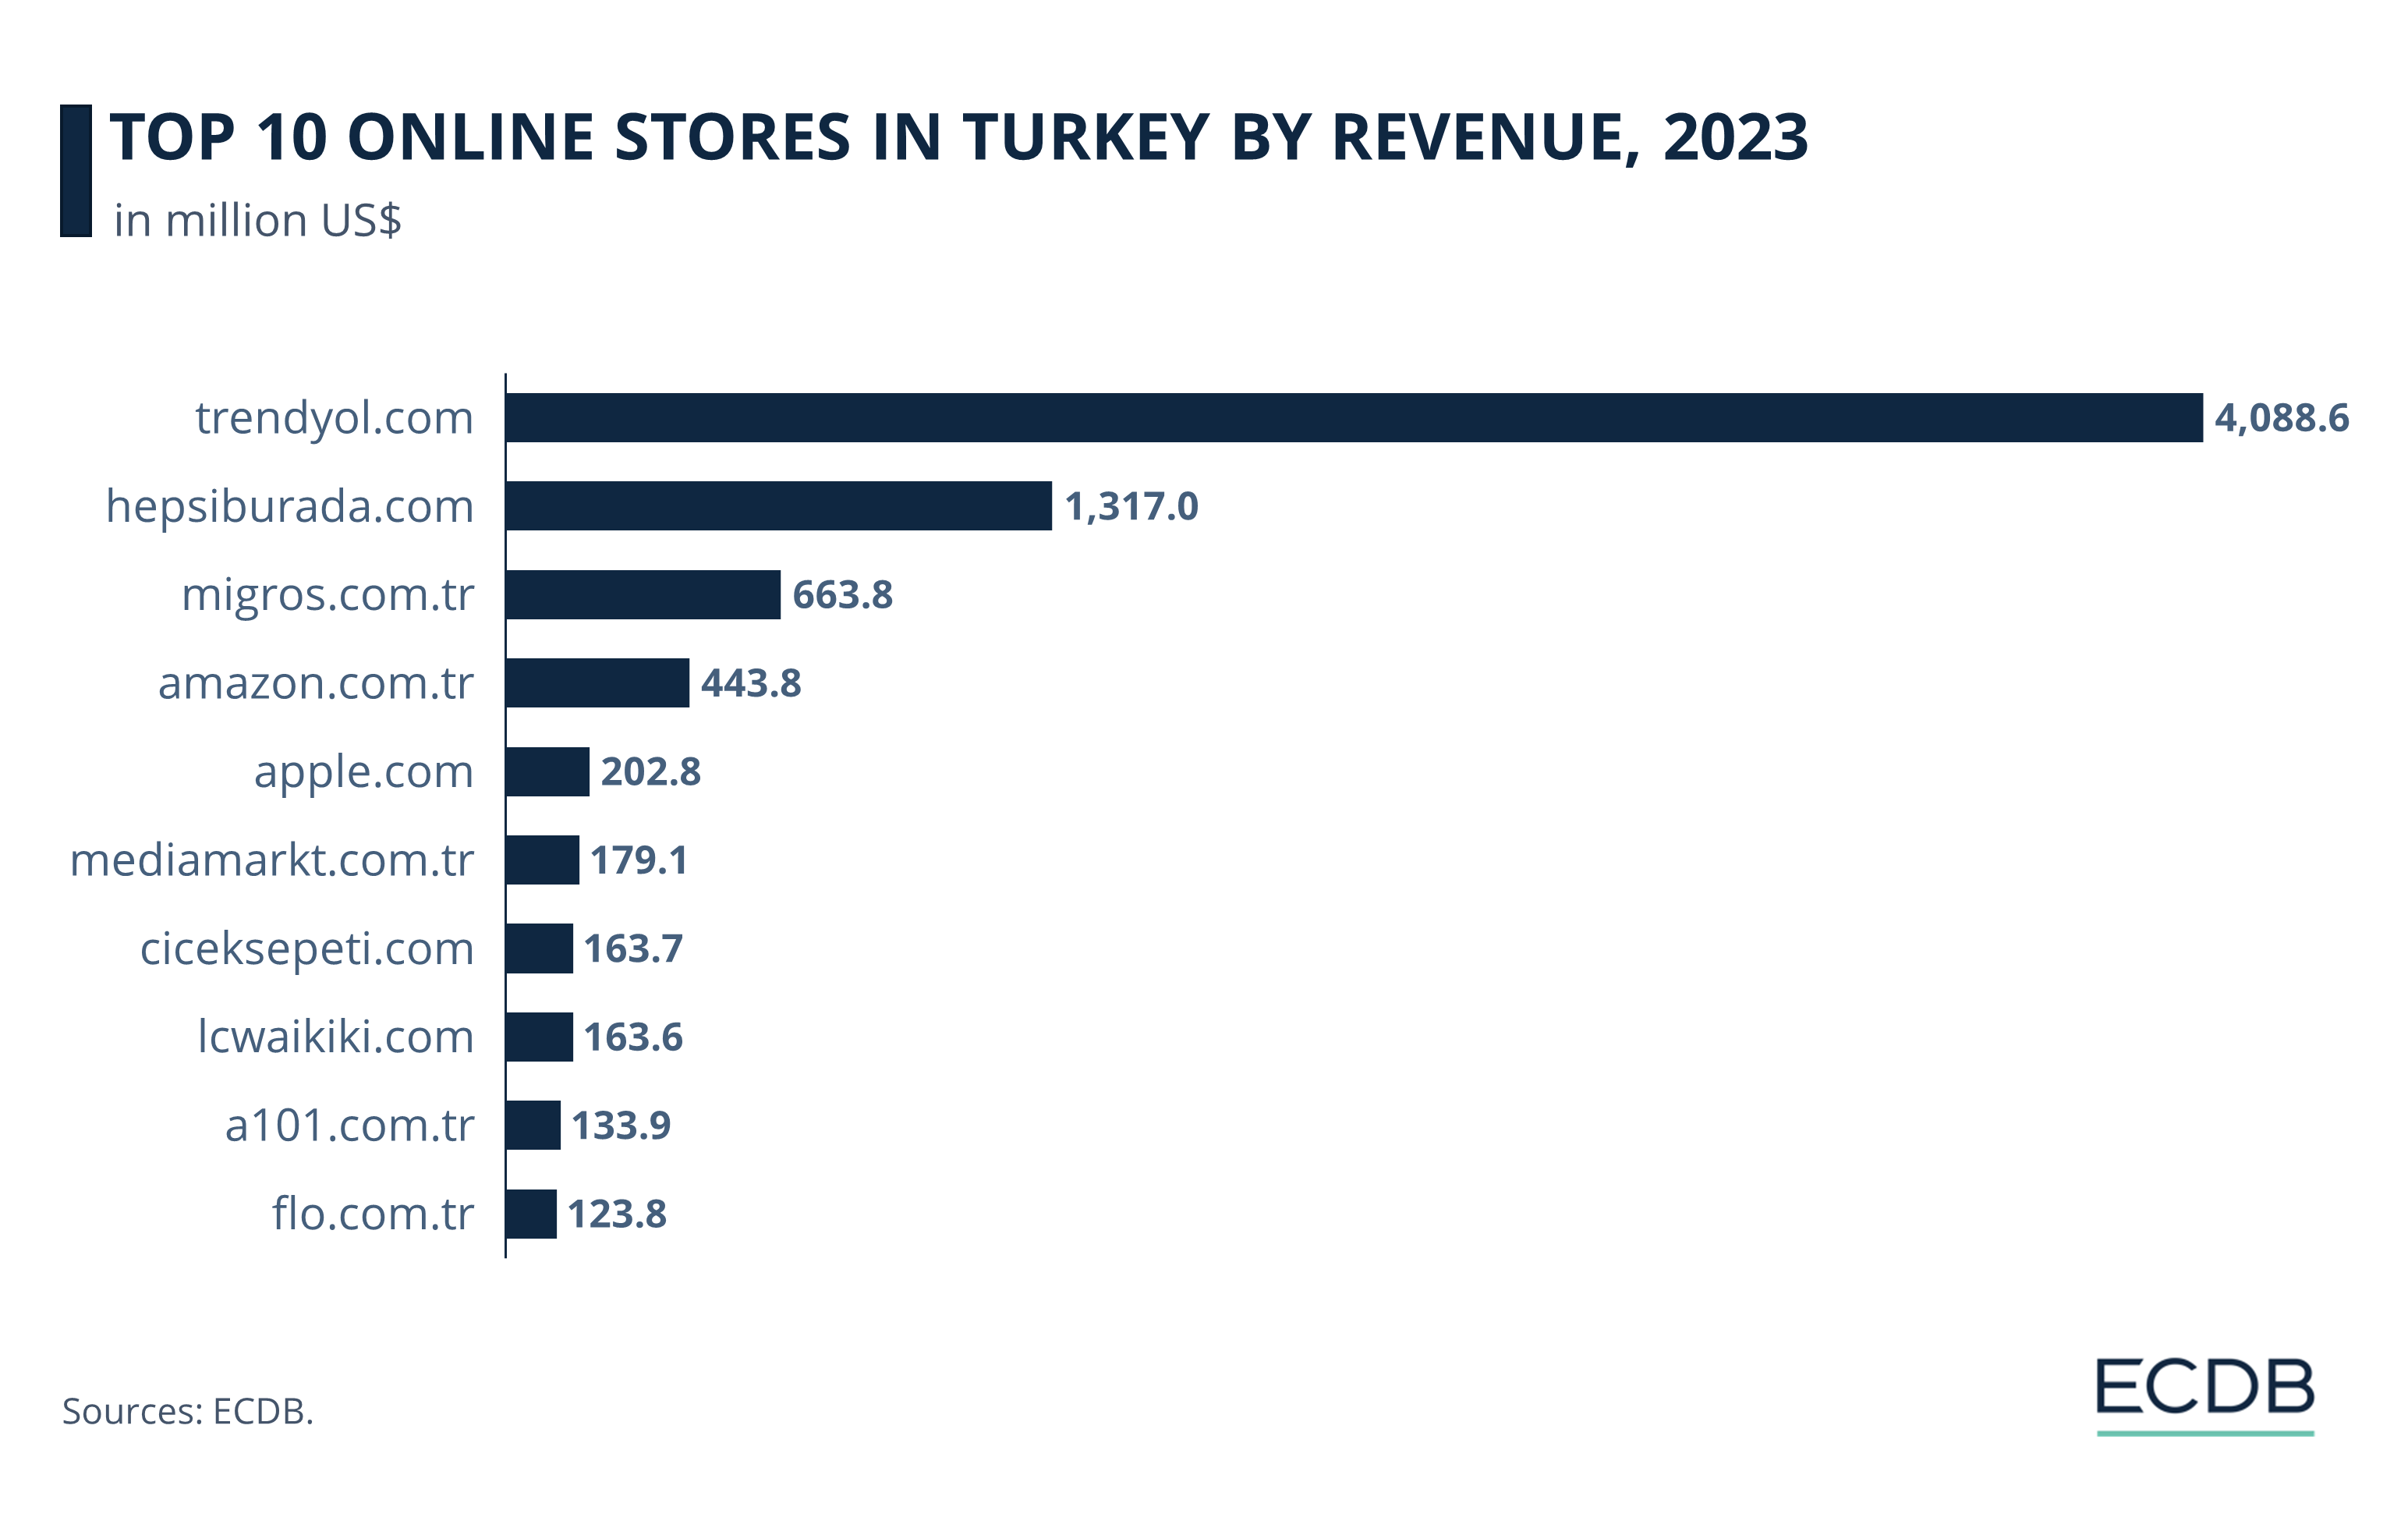 Top 10 Online Stores in Turkey by Revenue, 2023